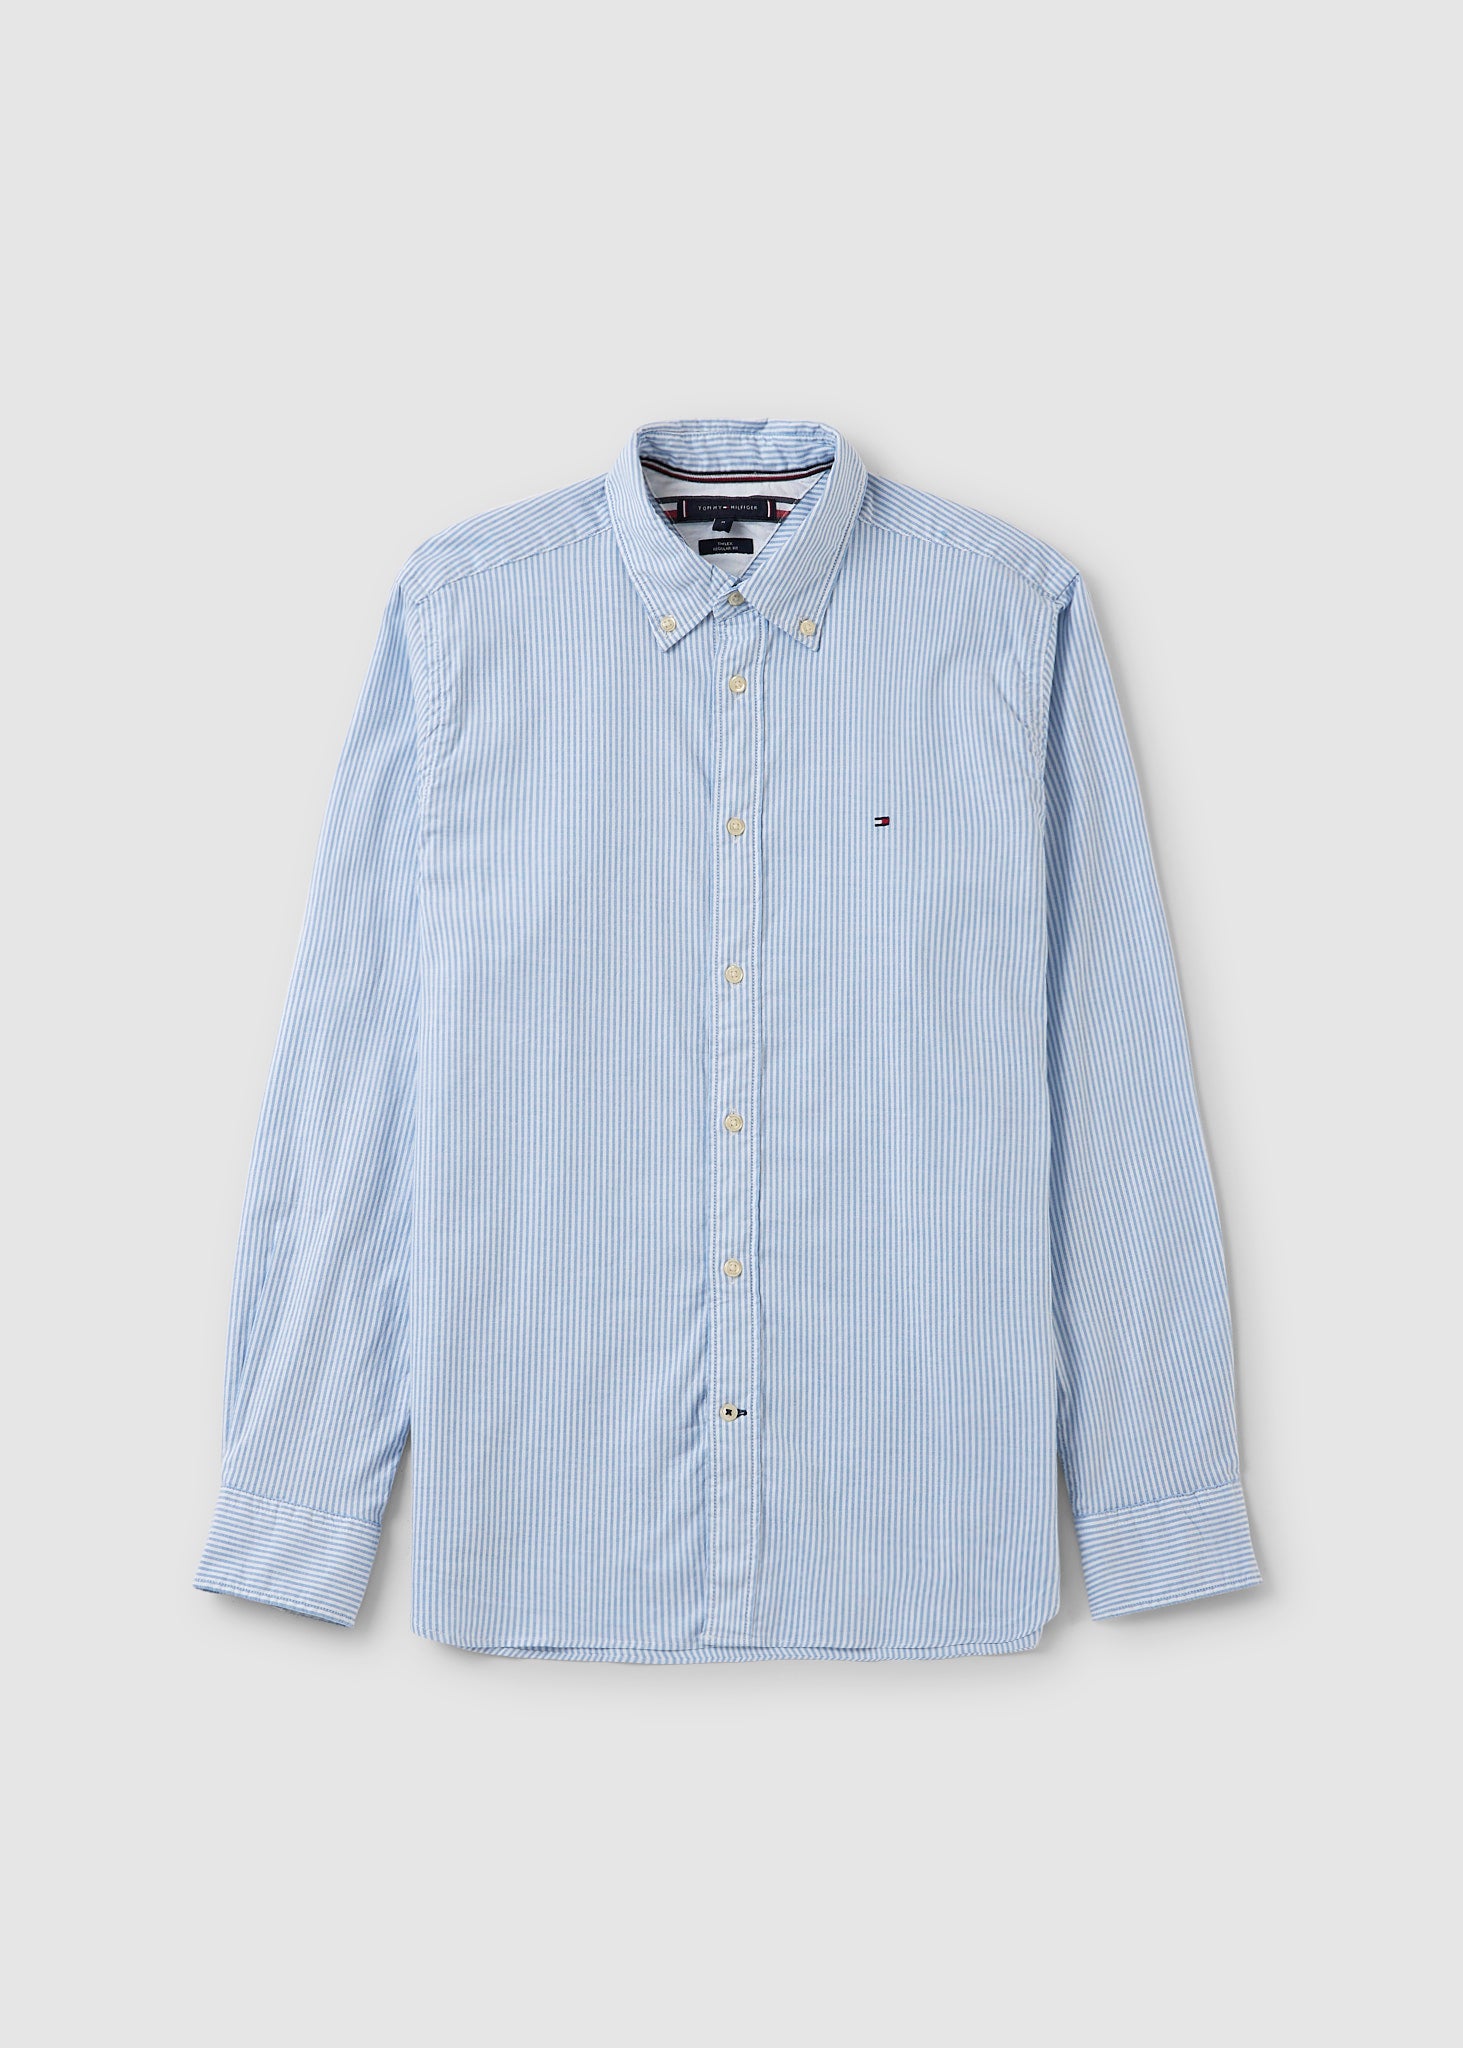 Image of Tommy Hilfiger Mens Core 1985 Flex Oxford Shirt In Copenhagen Blue/White